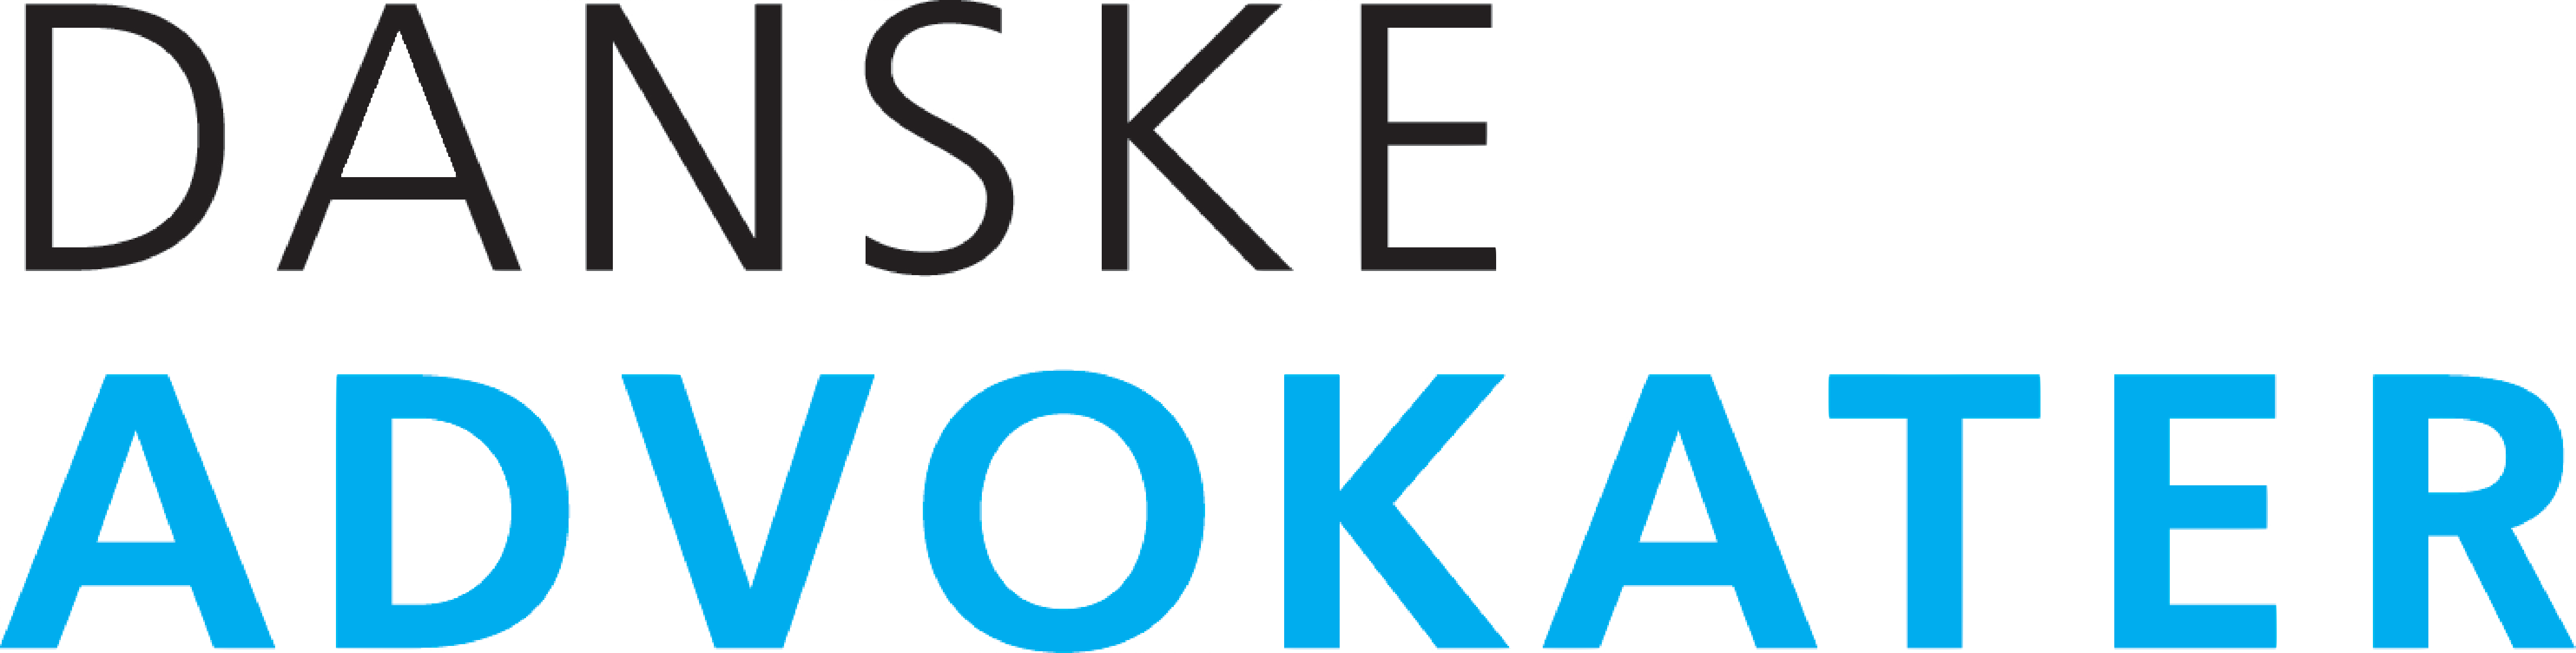 Danske Advokater logo png